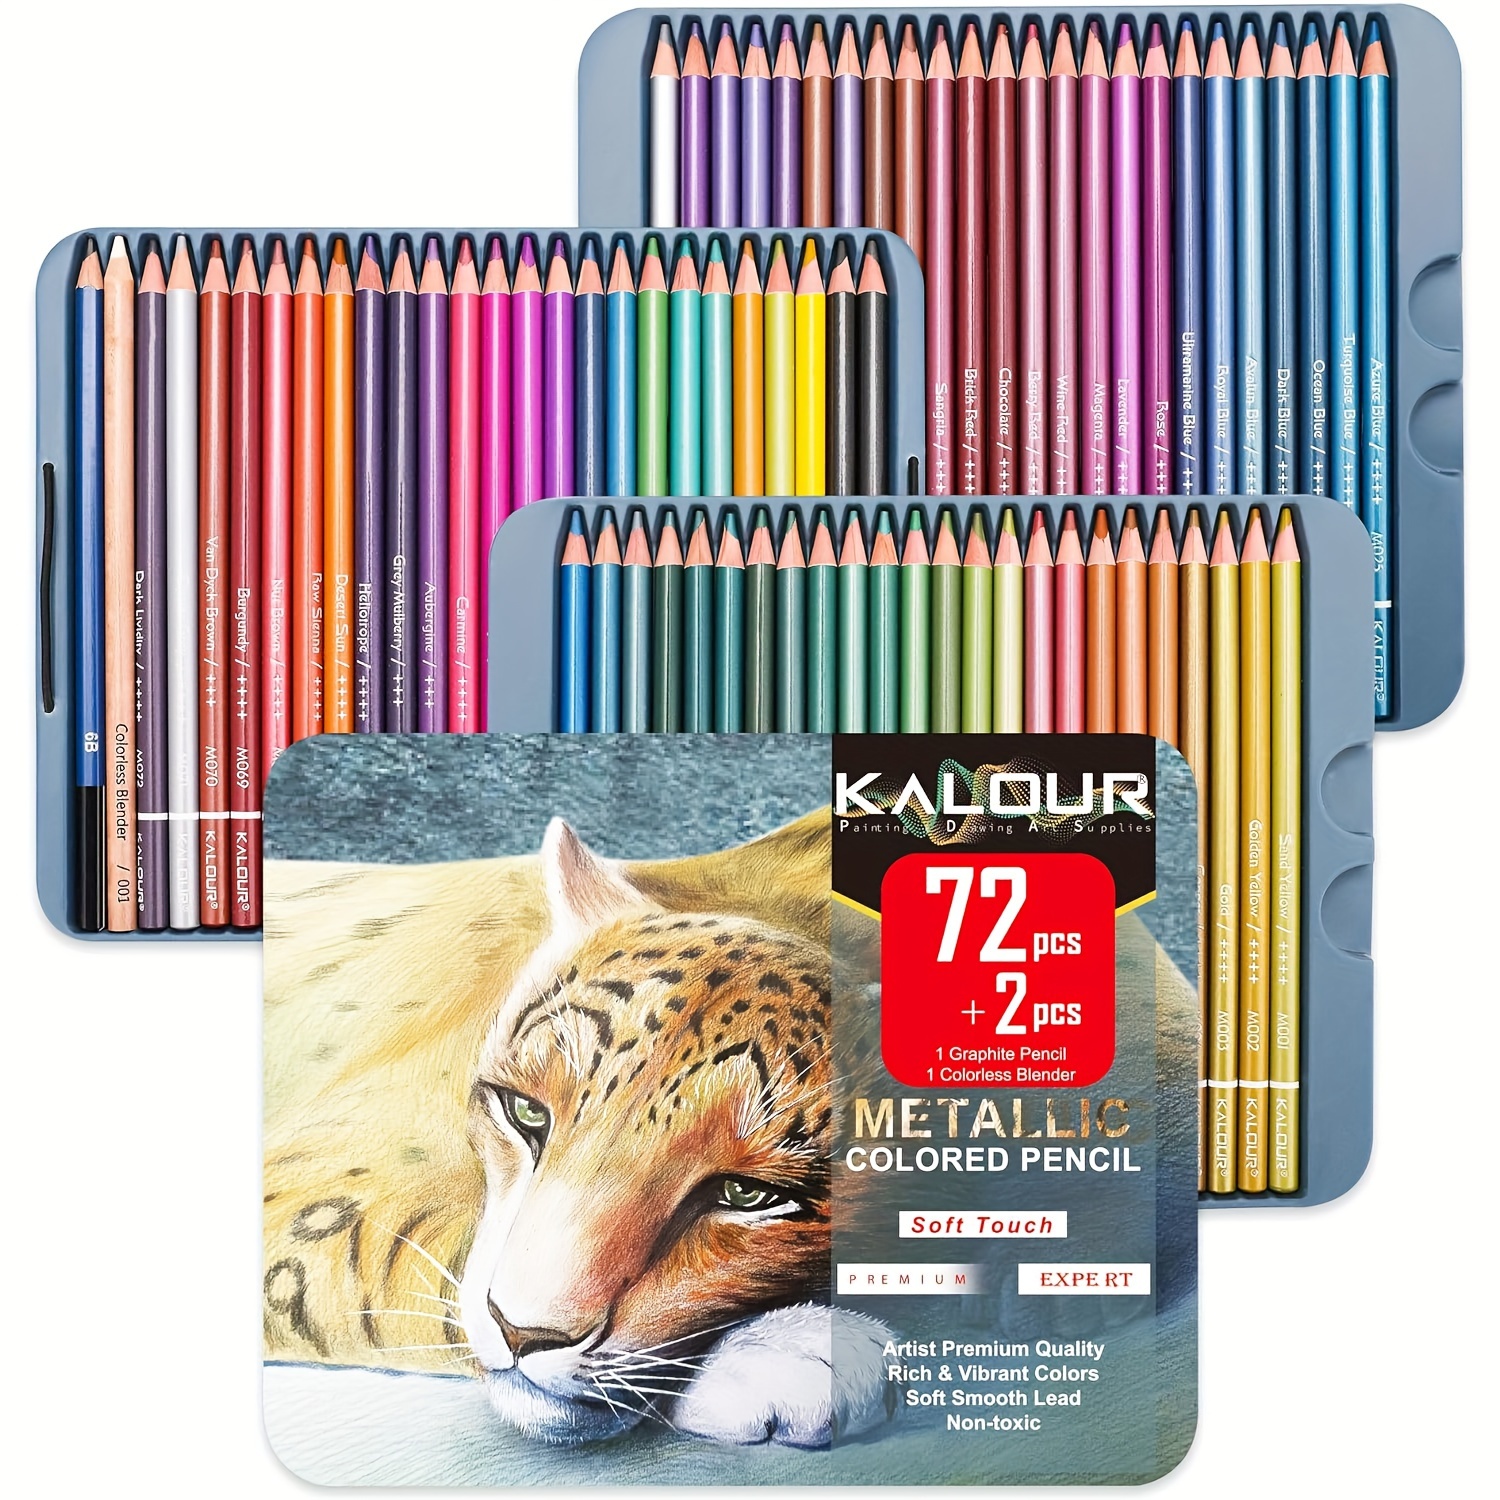 

Kalour 72 Metallic Colored Pencils Set Metallic Pastel Pencils For Adults Coloring Beginners Artists